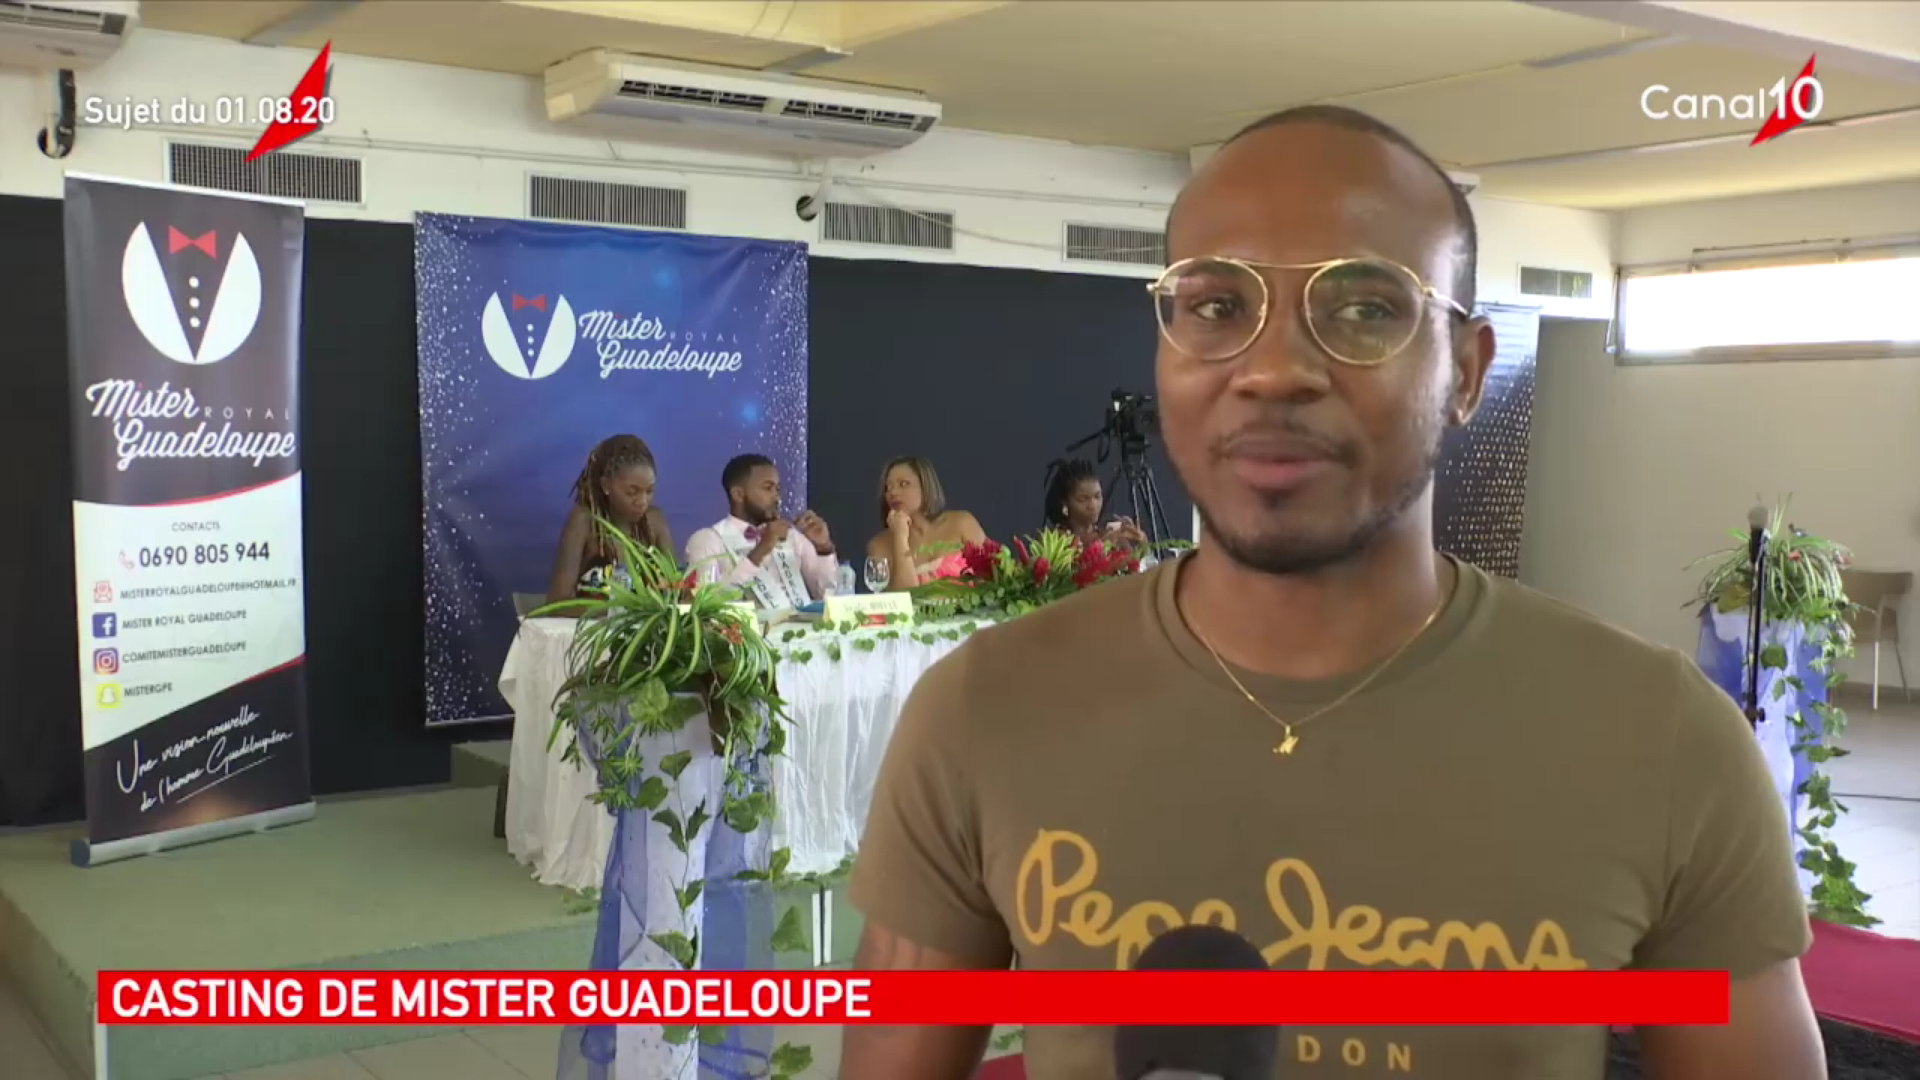 [Vidéo] Onews Guadeloupe. Casting de Mister Guadeloupe (Canal 10)